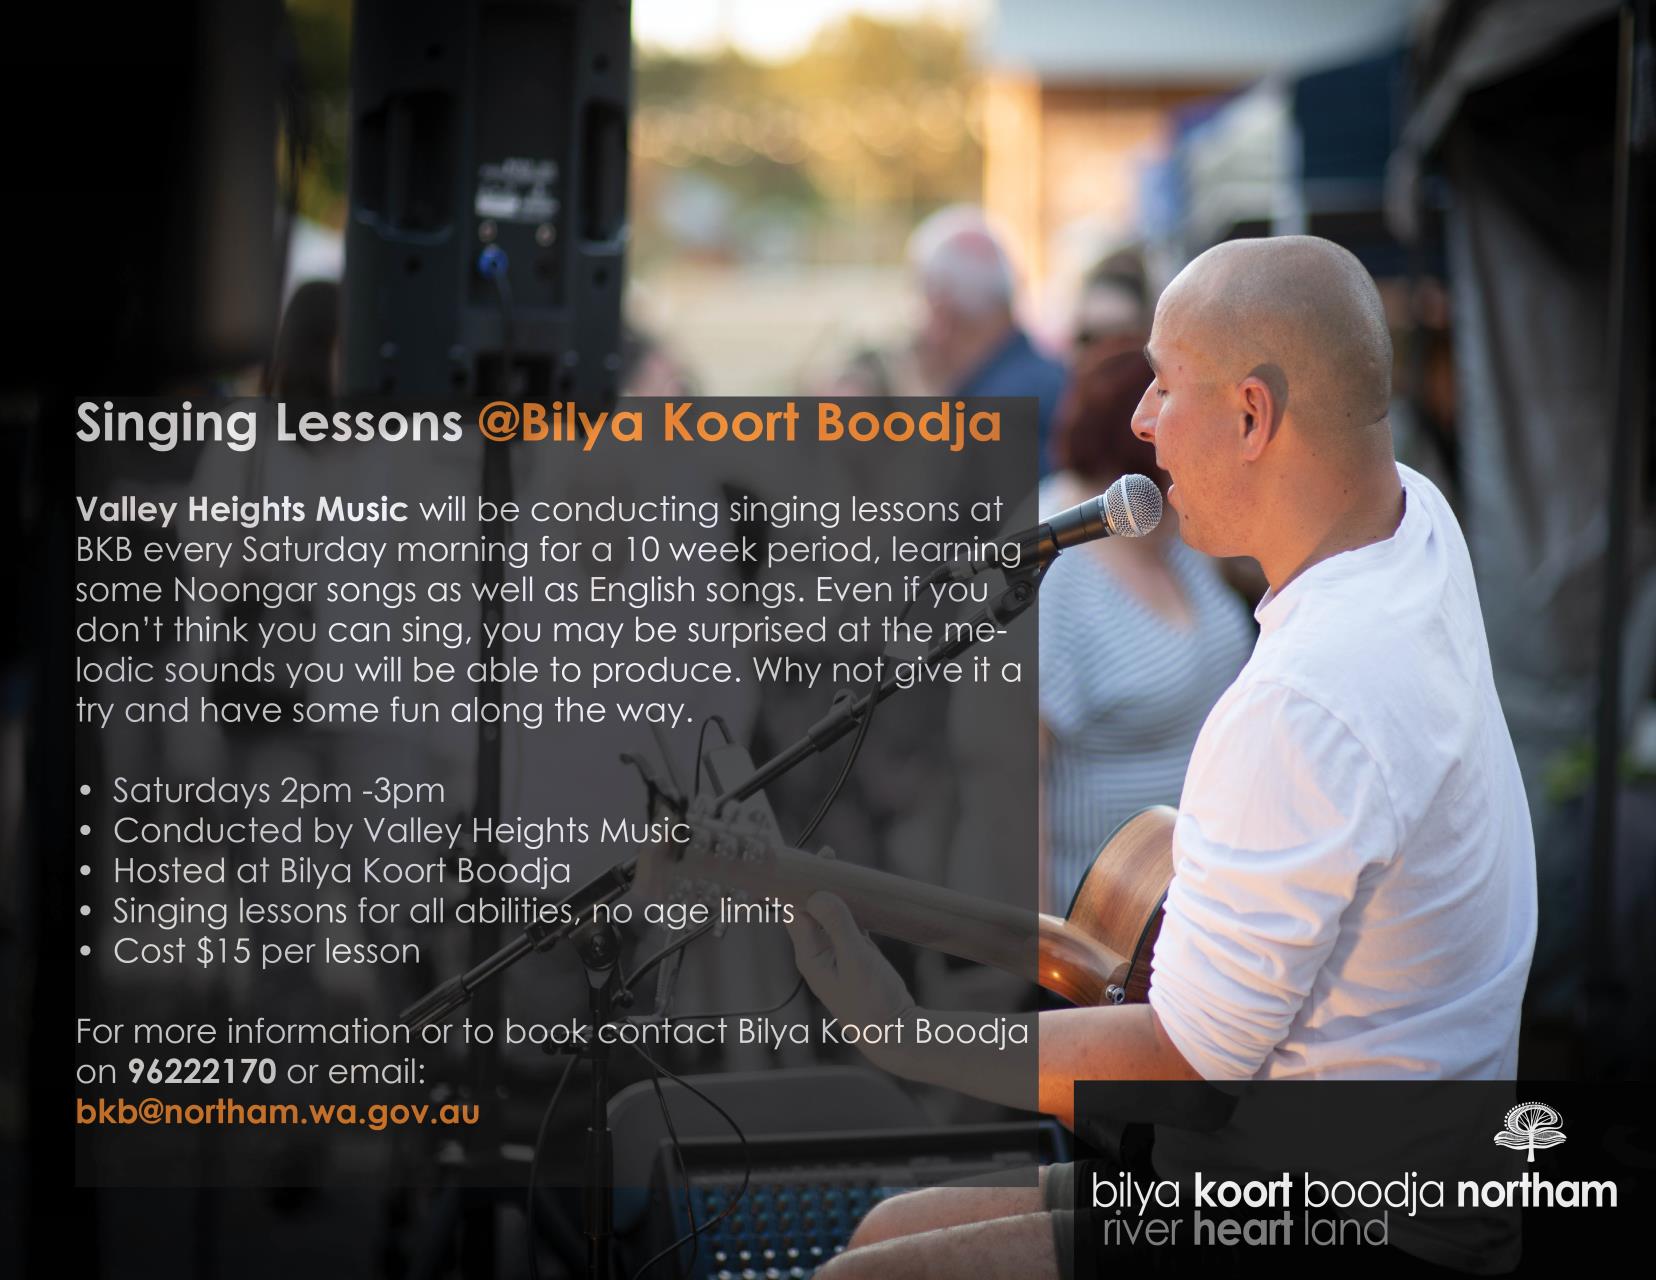 Singing Lessons at Bilya Koort Boodja